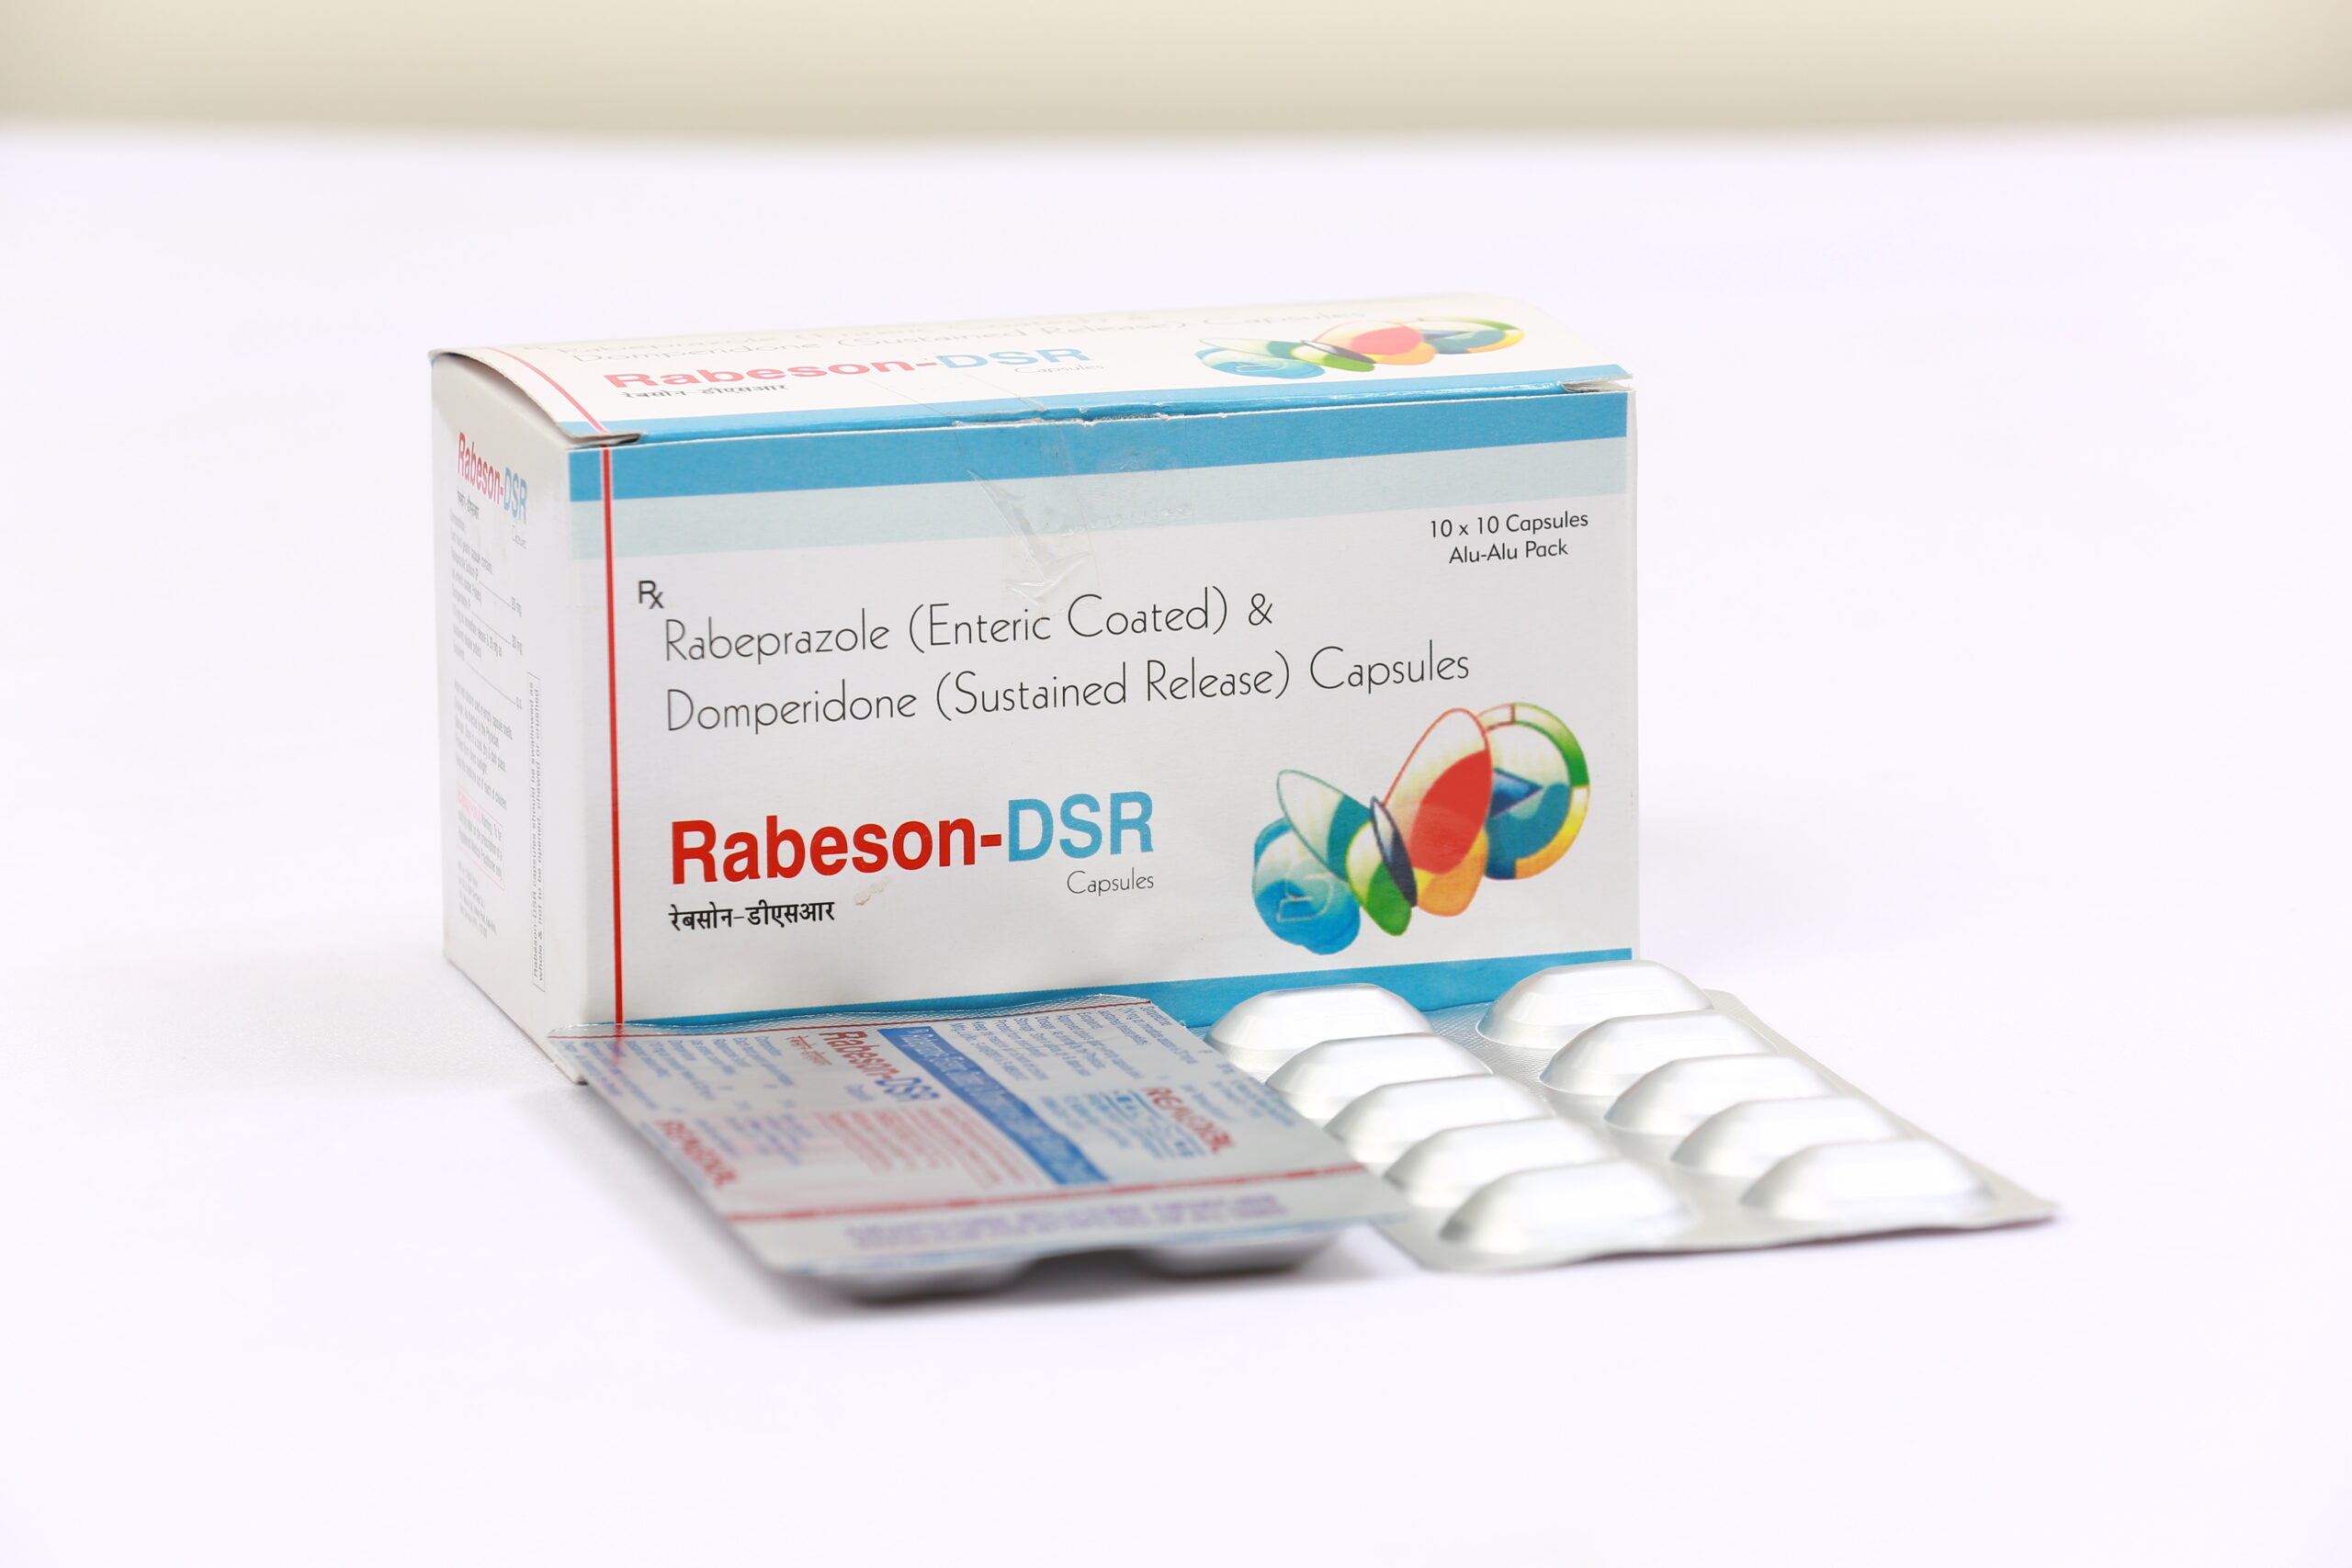 RABESON-DSR (Rabeprazole Sodium20mg + Domperidone 30mg)